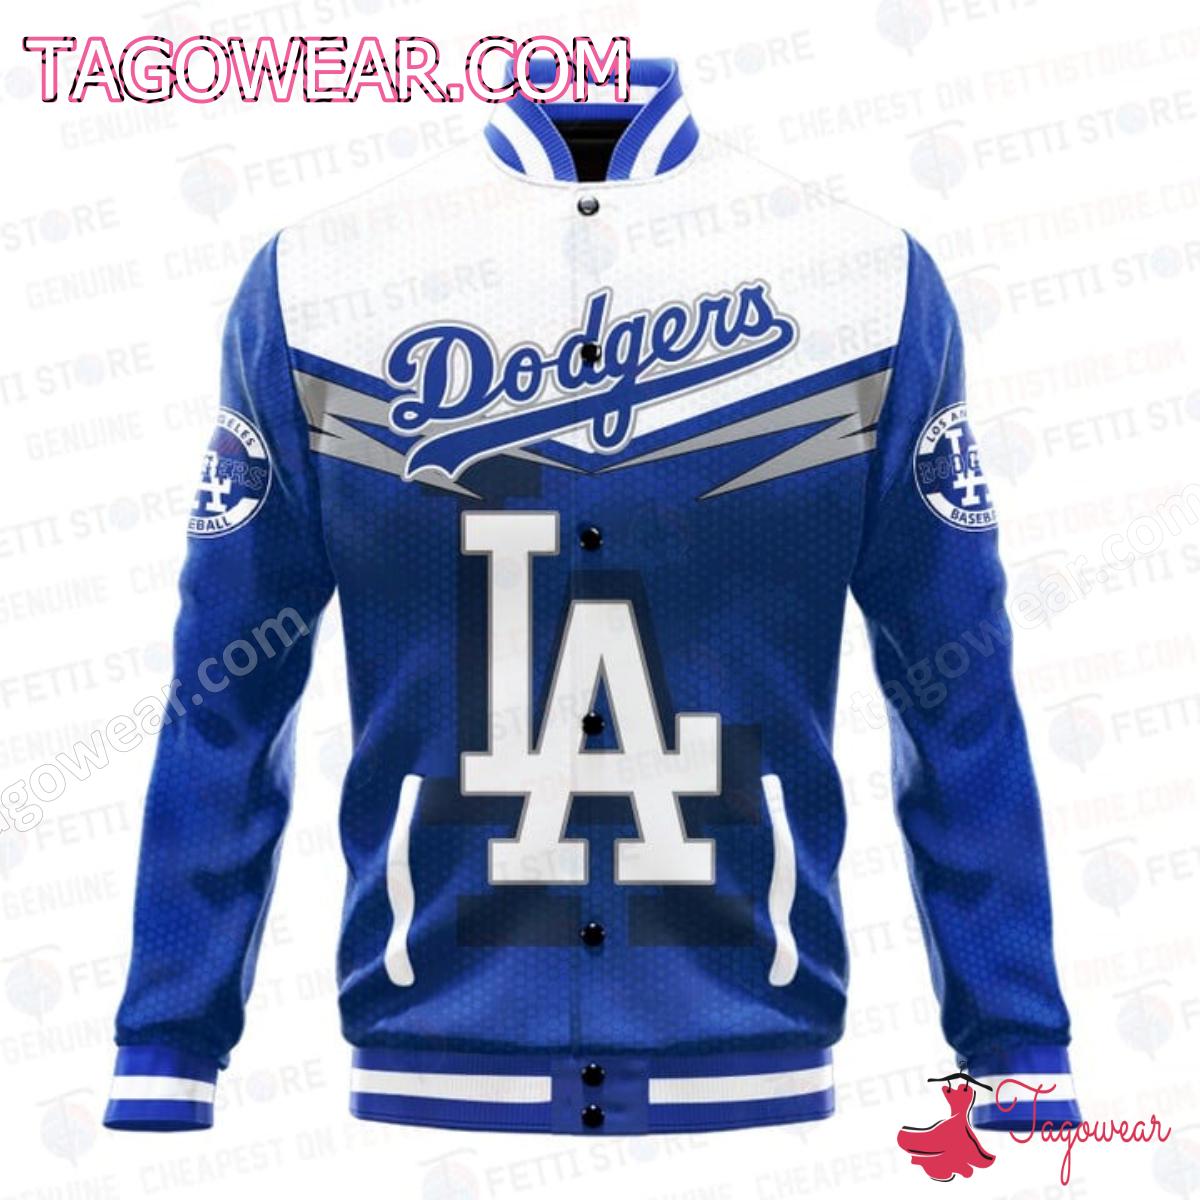 Los Angeles Dodgers Mlb Baseball Jacket a